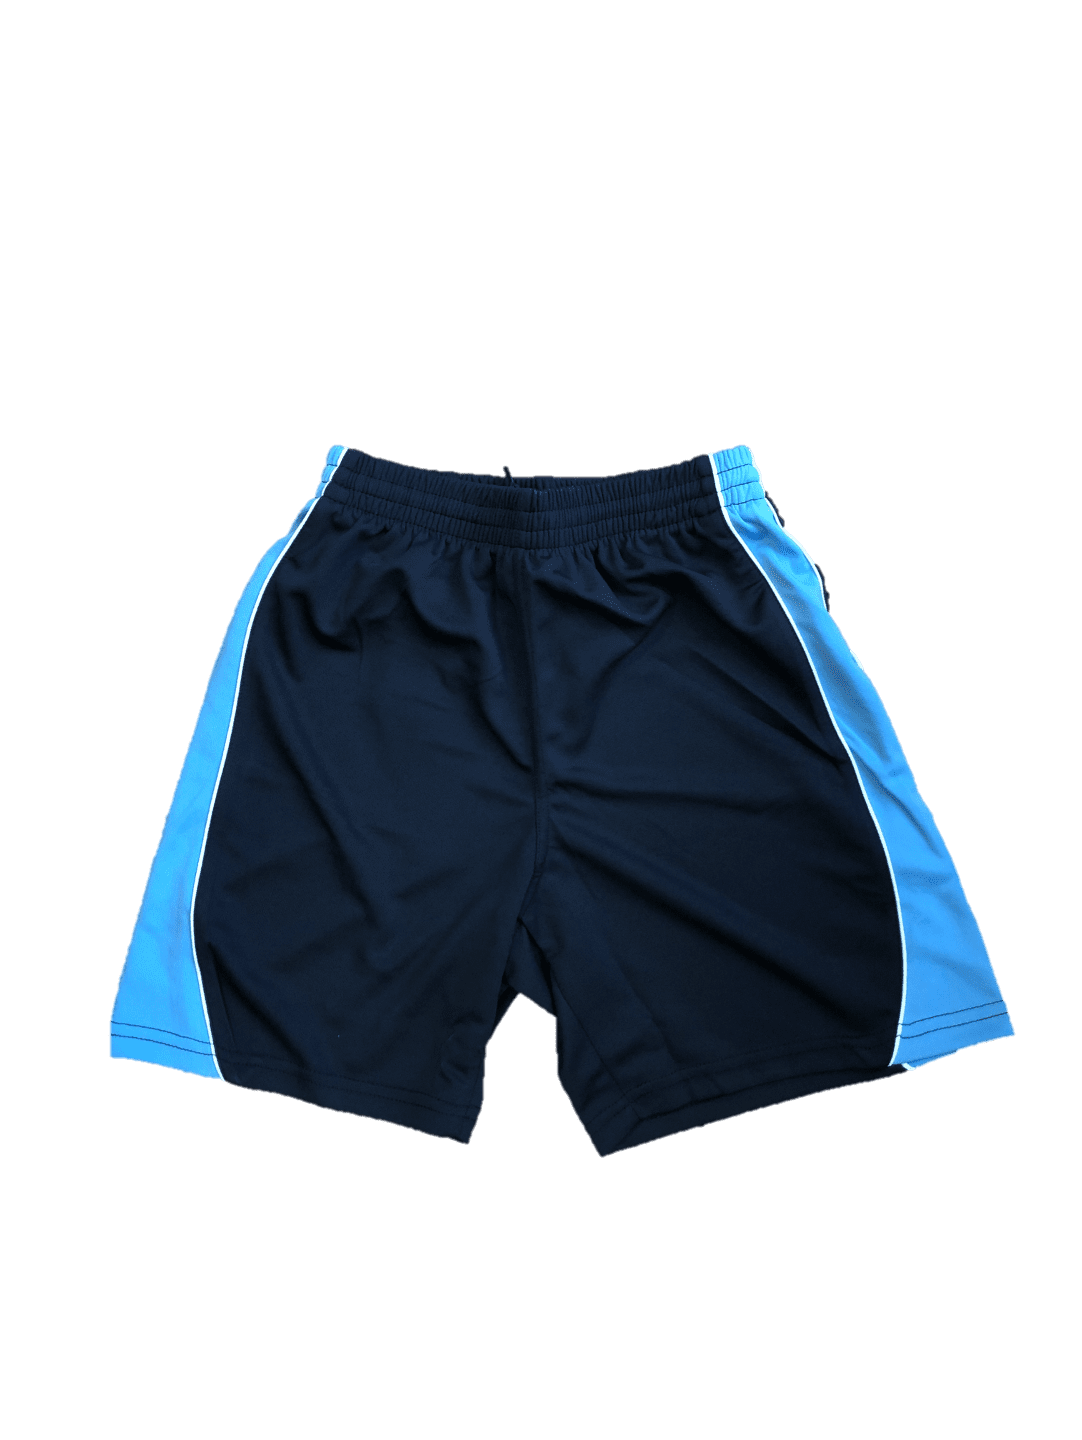 Pedmore High School PE Shorts (Unisex) - DANCERS